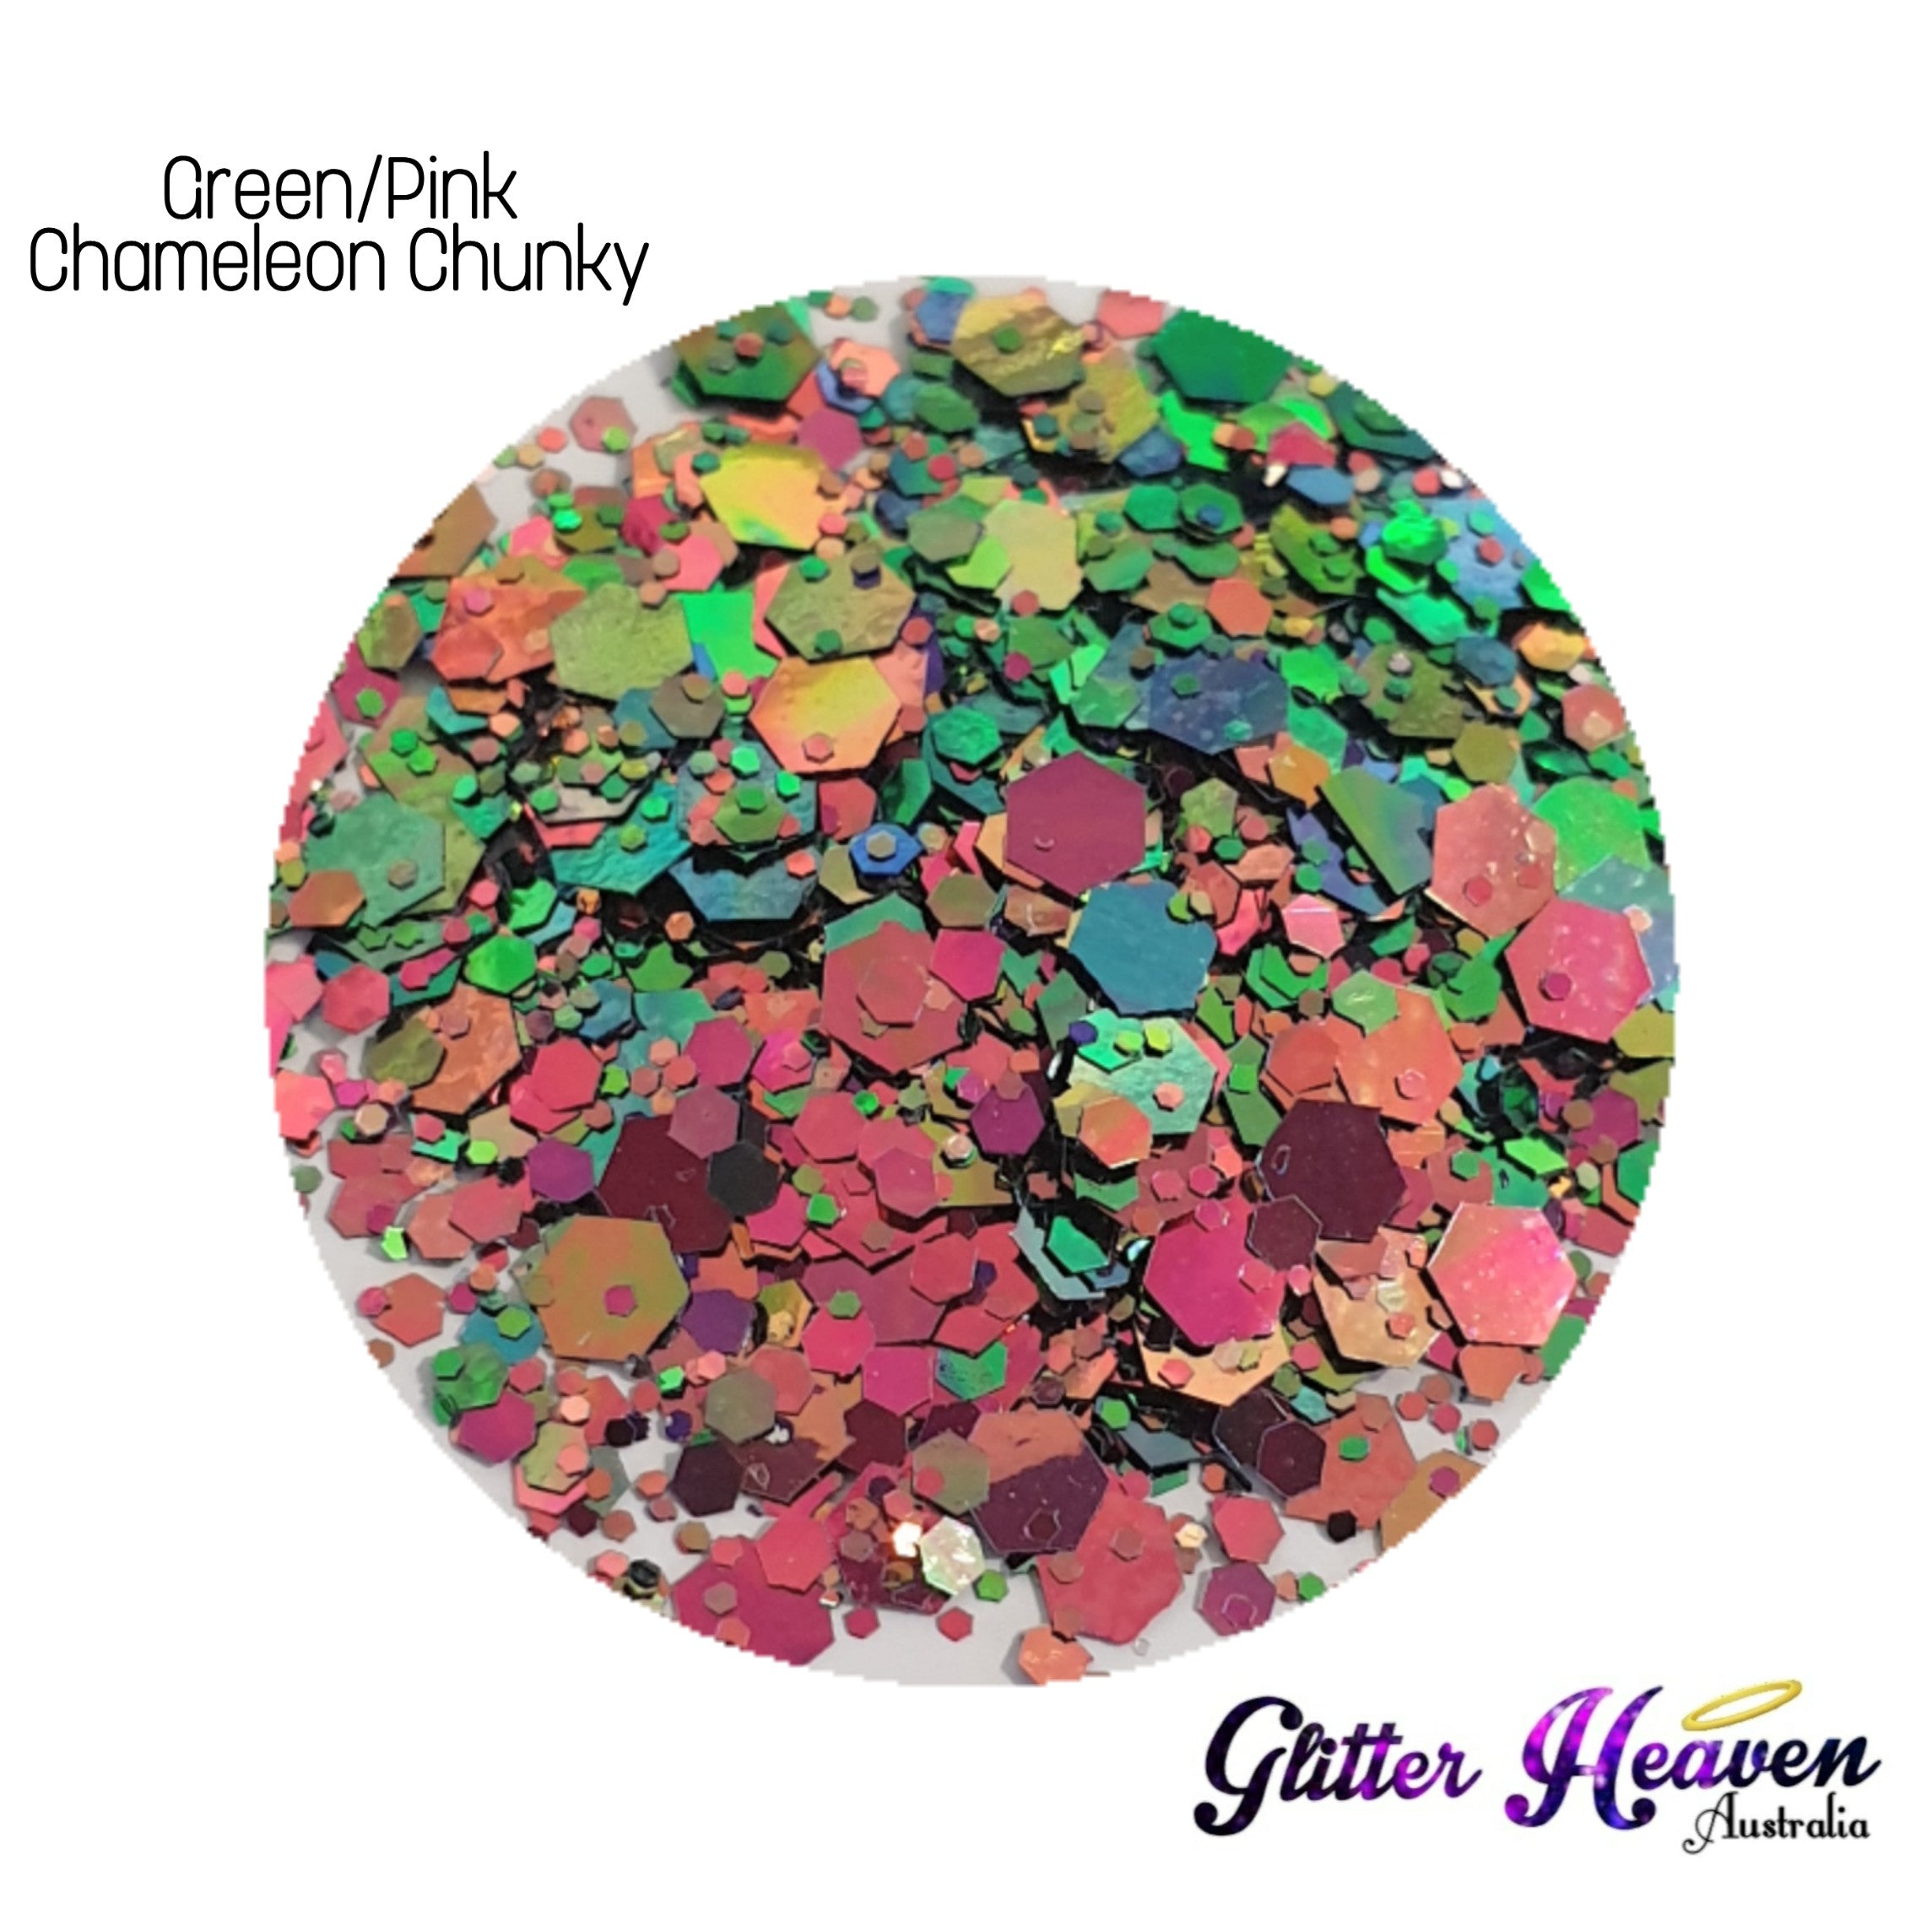 Green/Pink Chameleon Chunky